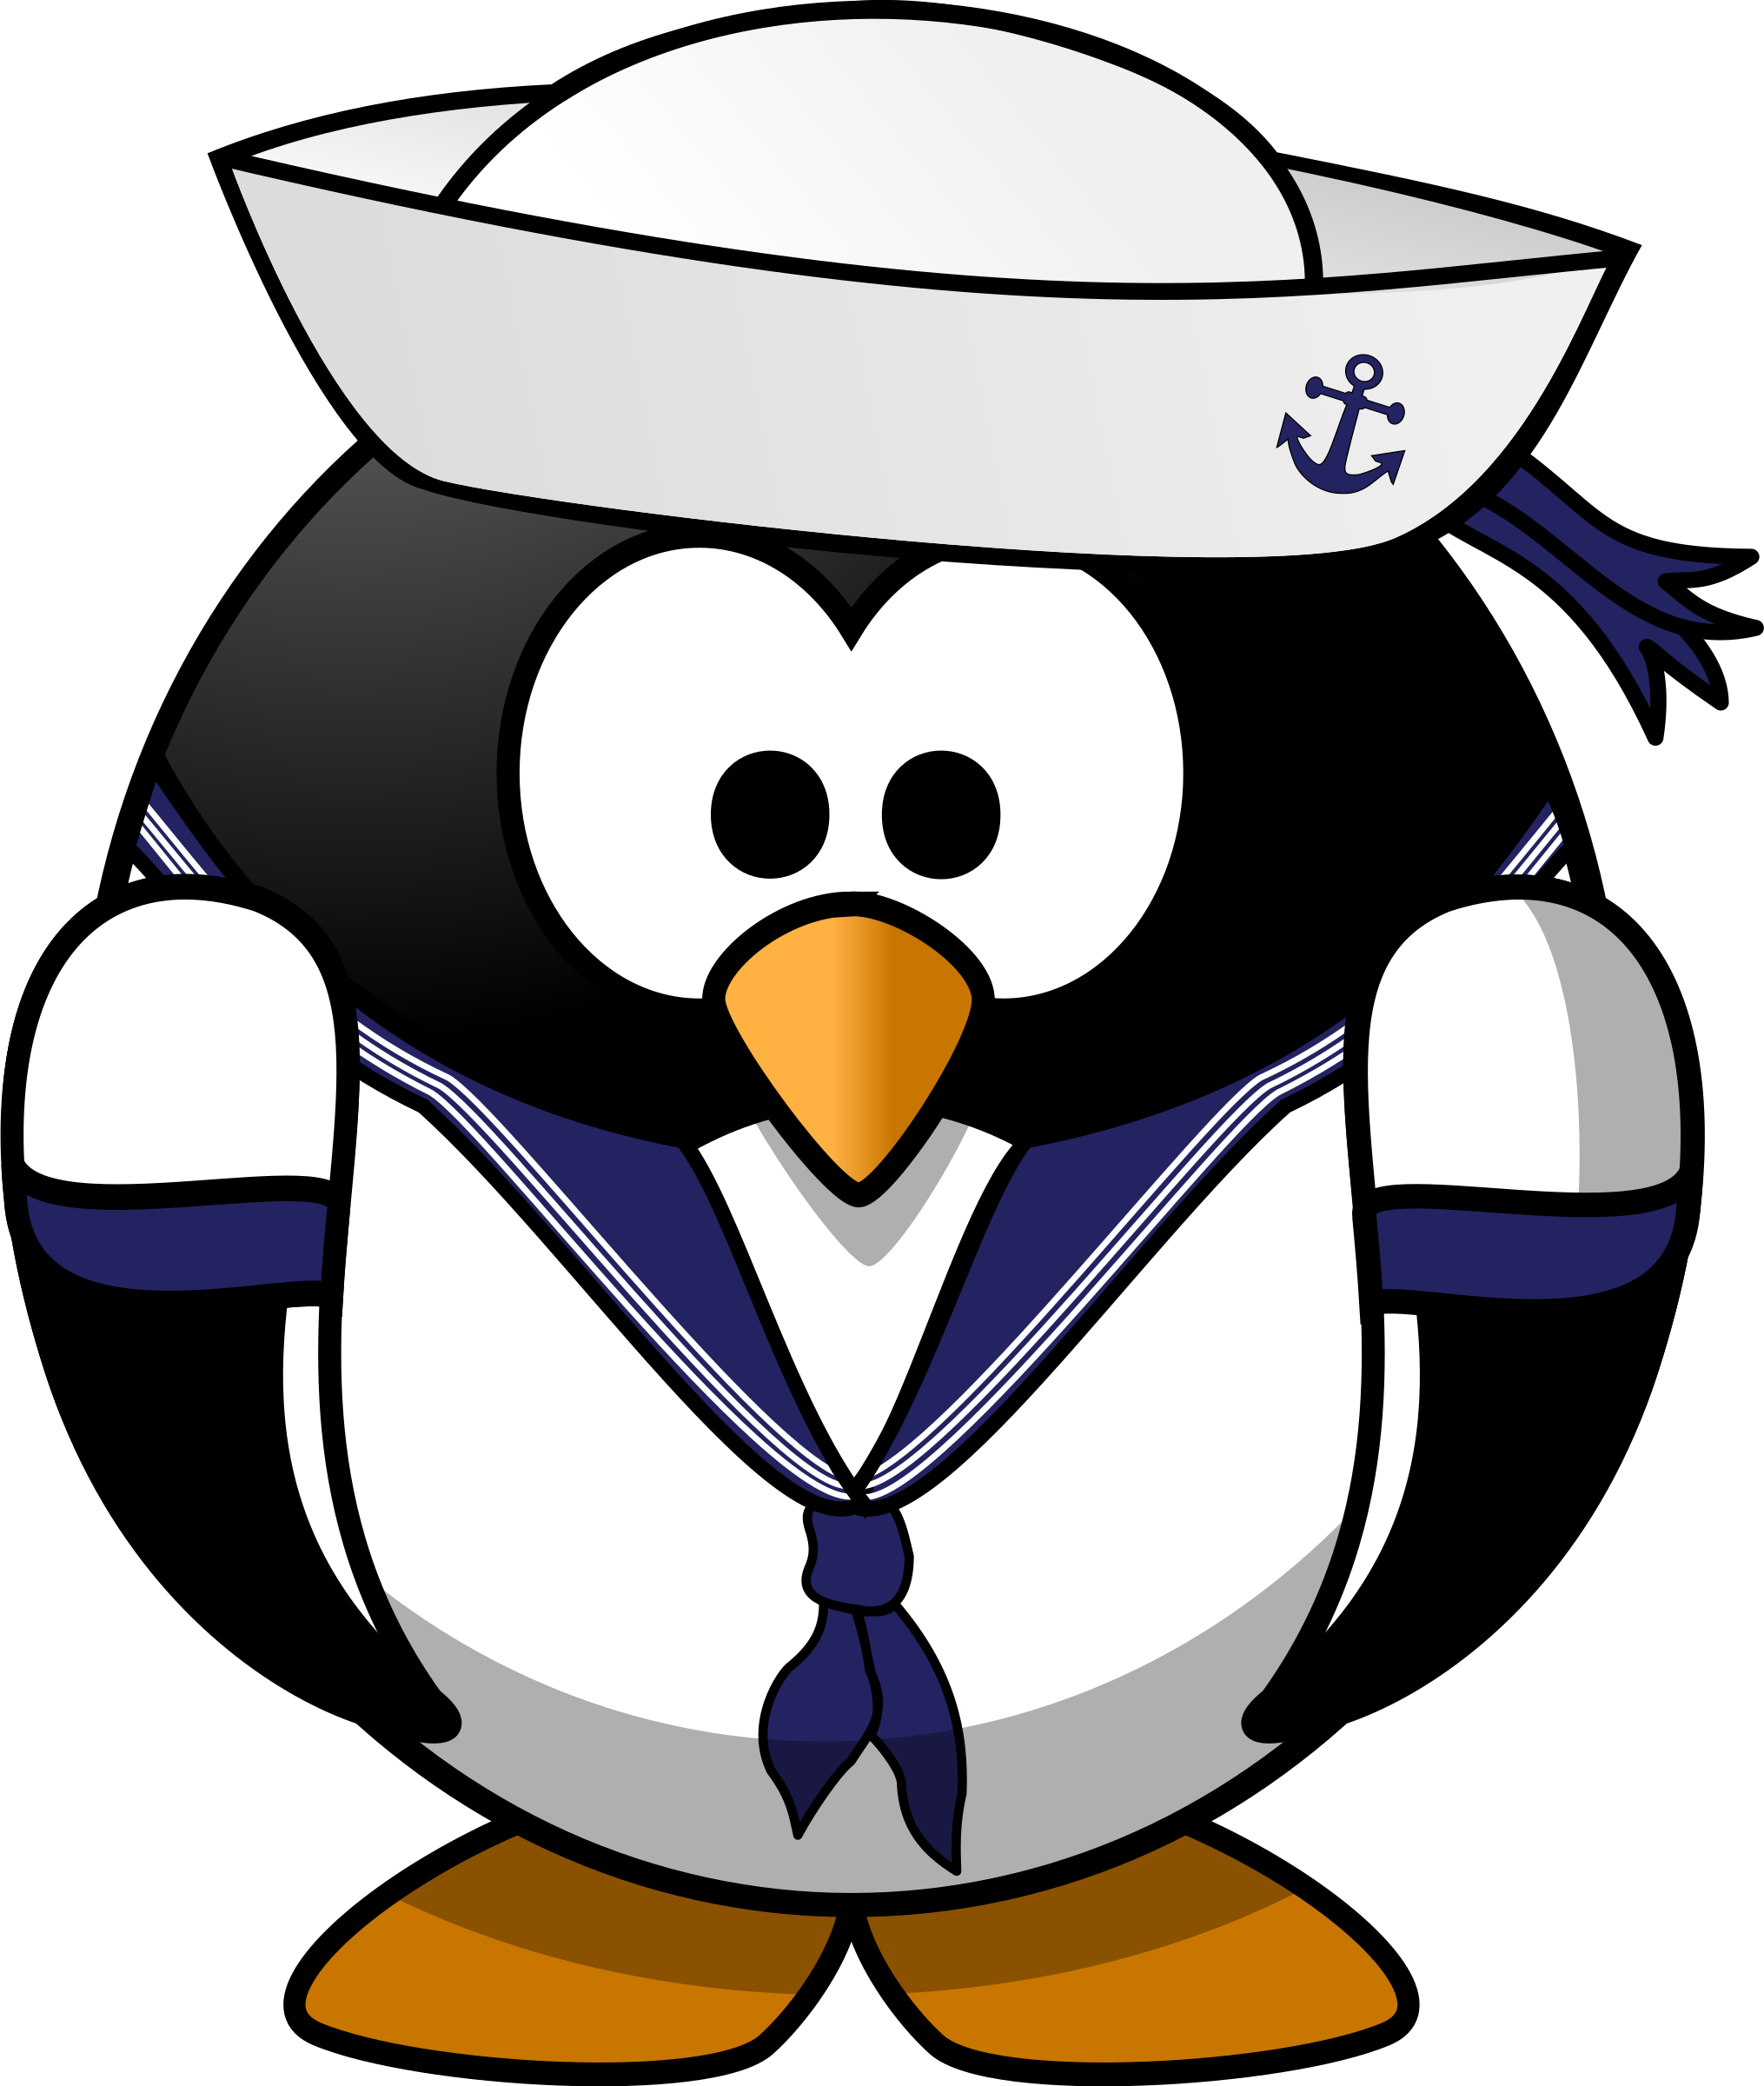 Sailor clipart sailor ship. Penguin big image png